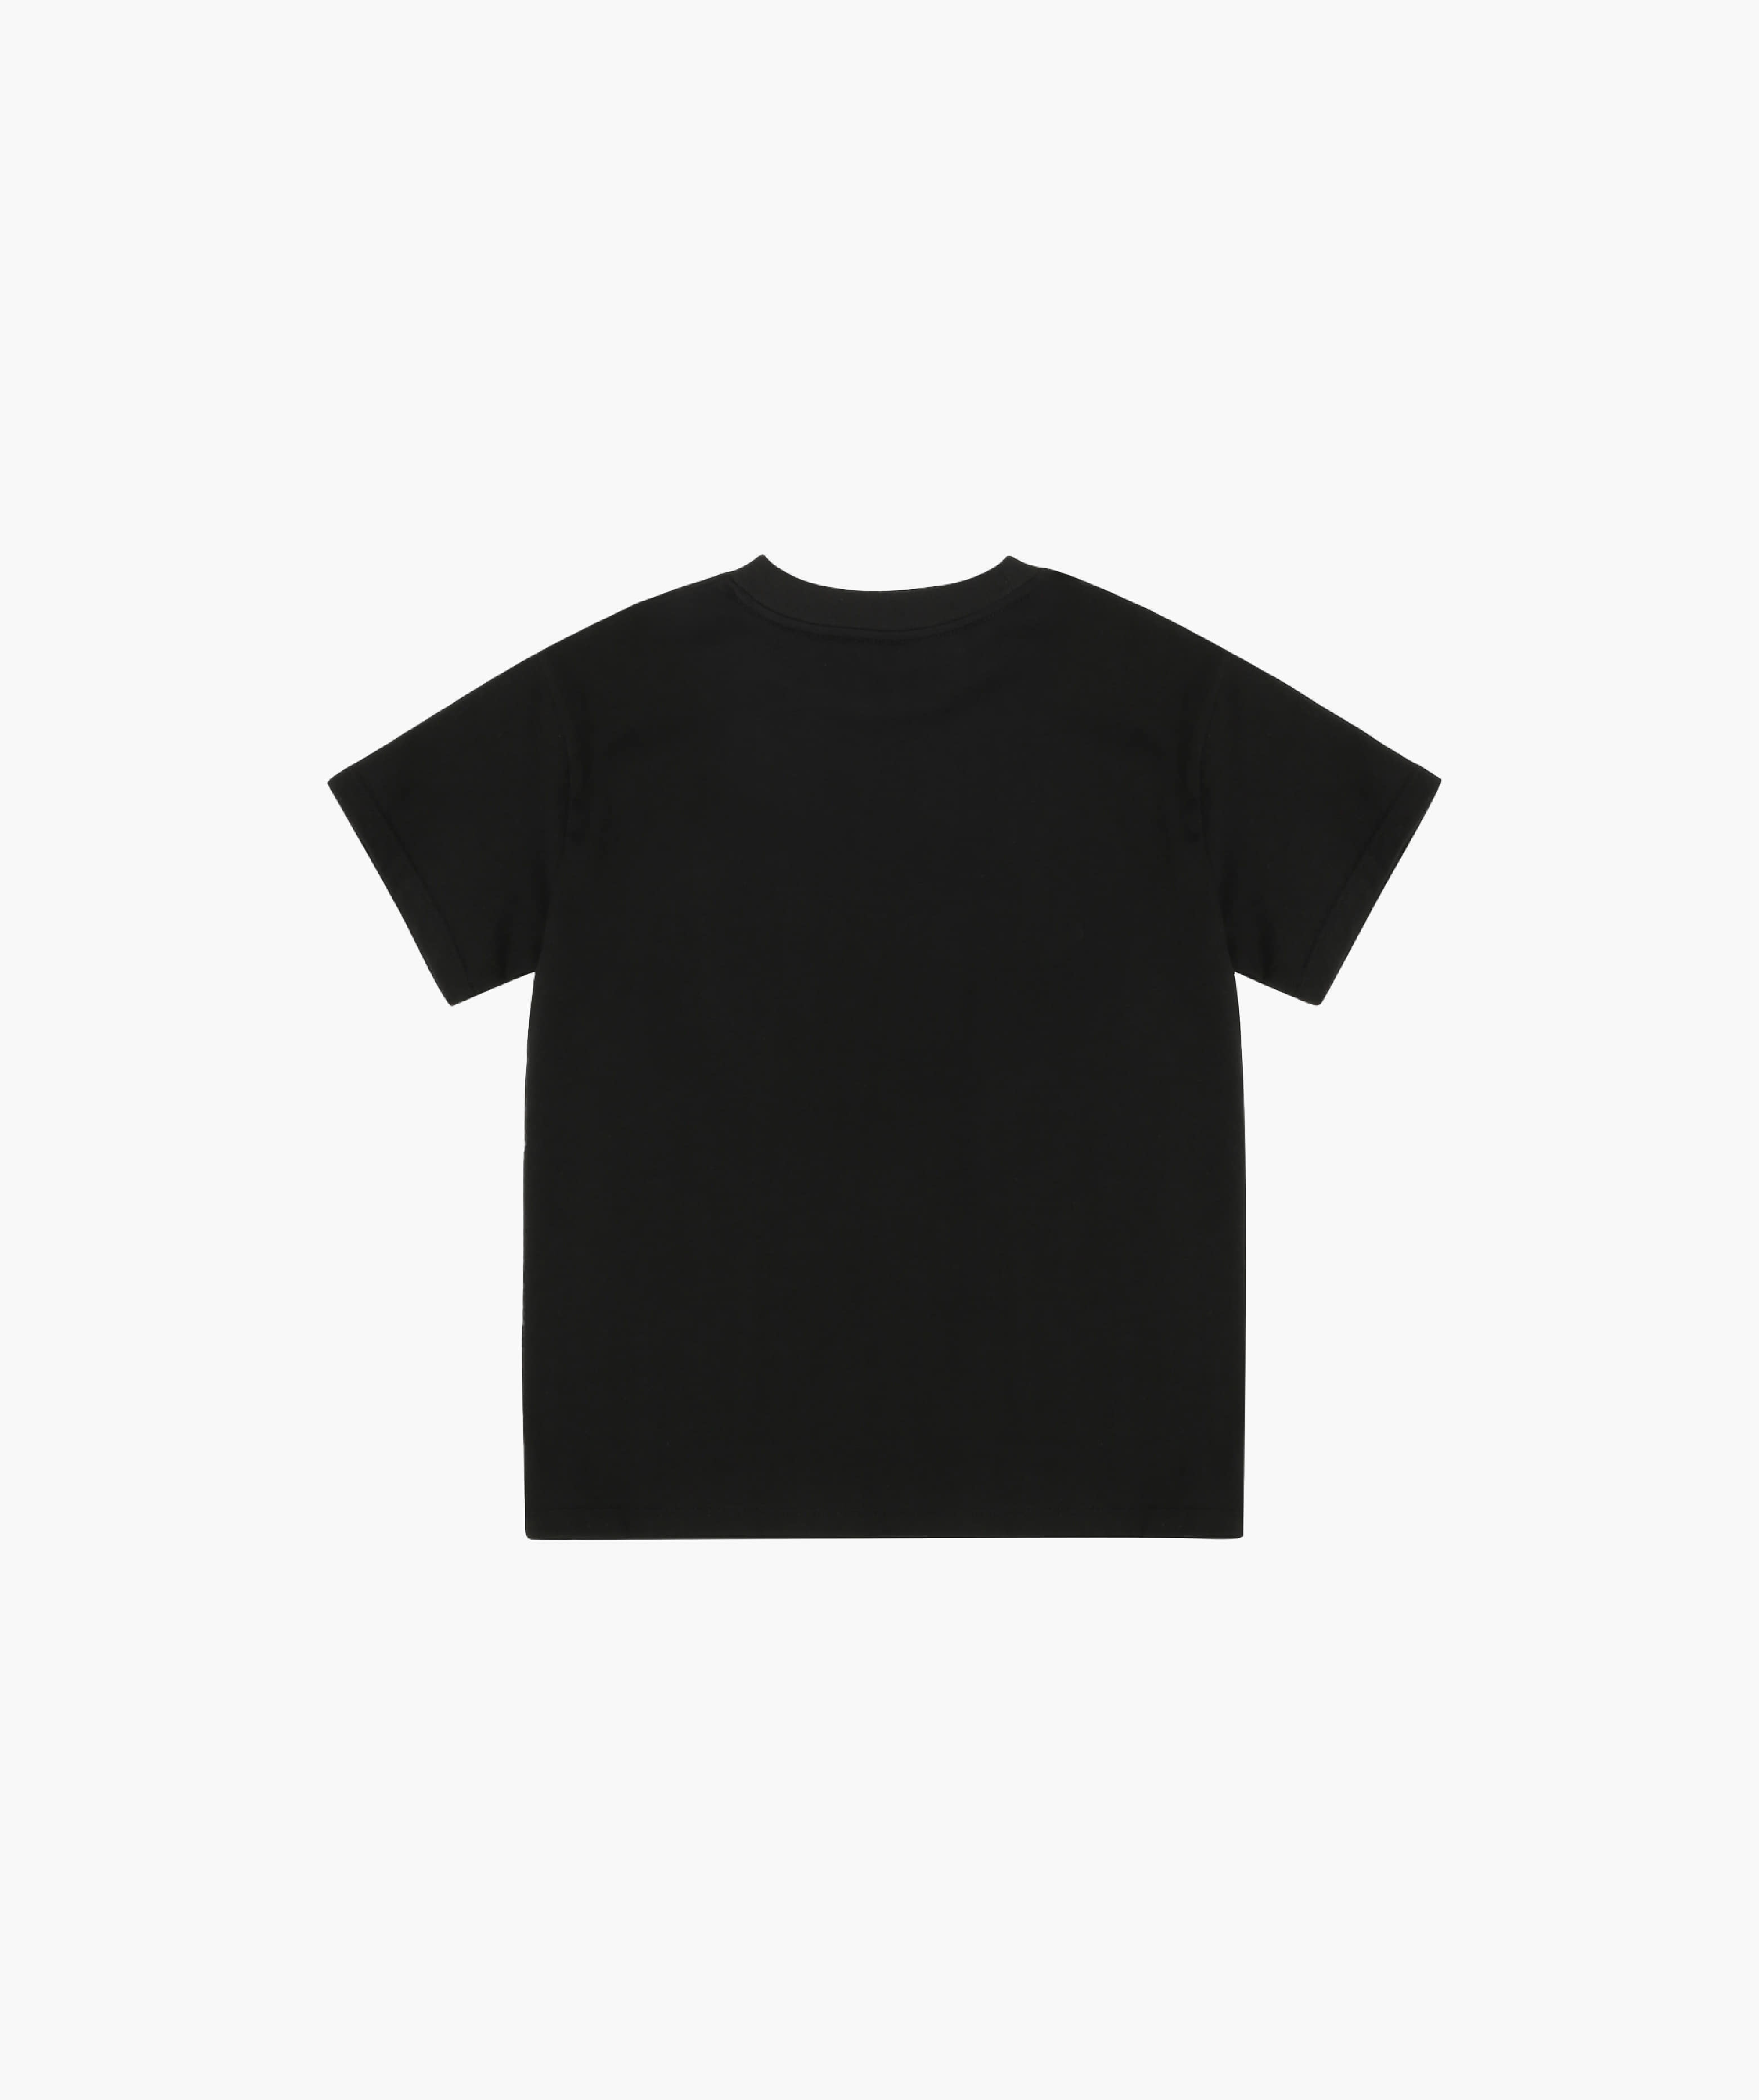 Dance T-Shirt_Black